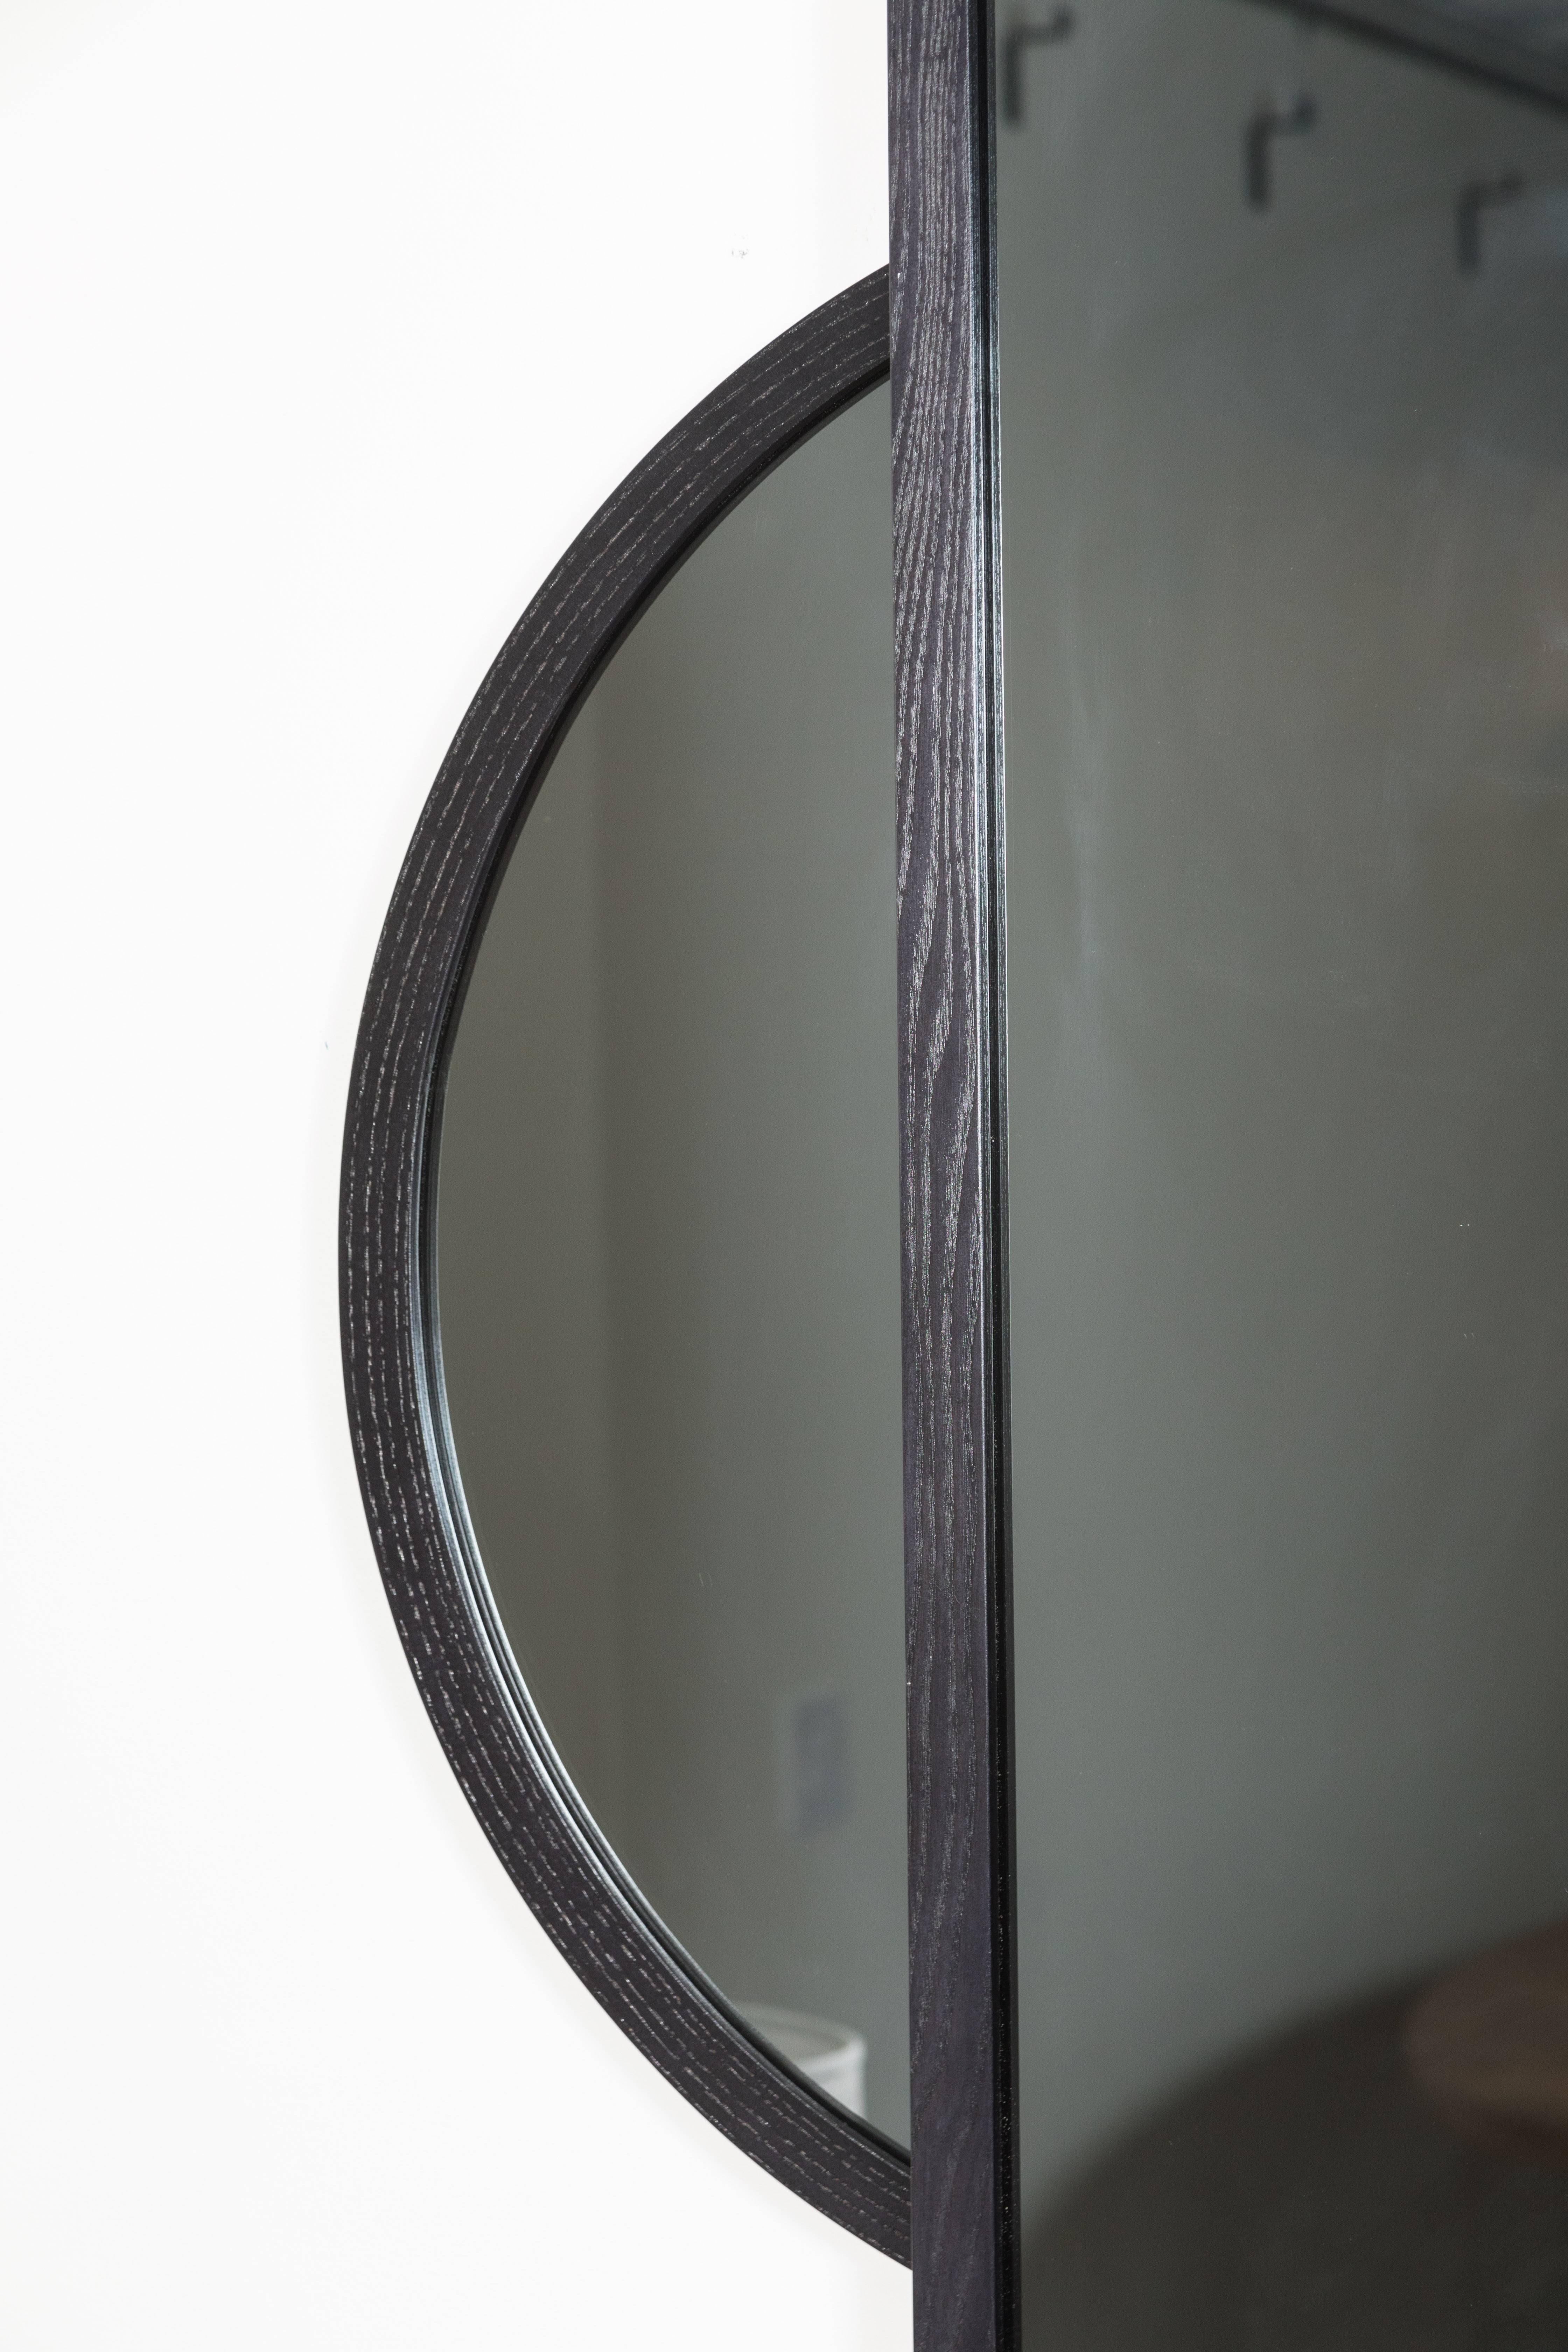 Eclipse mirror by O&G studio.